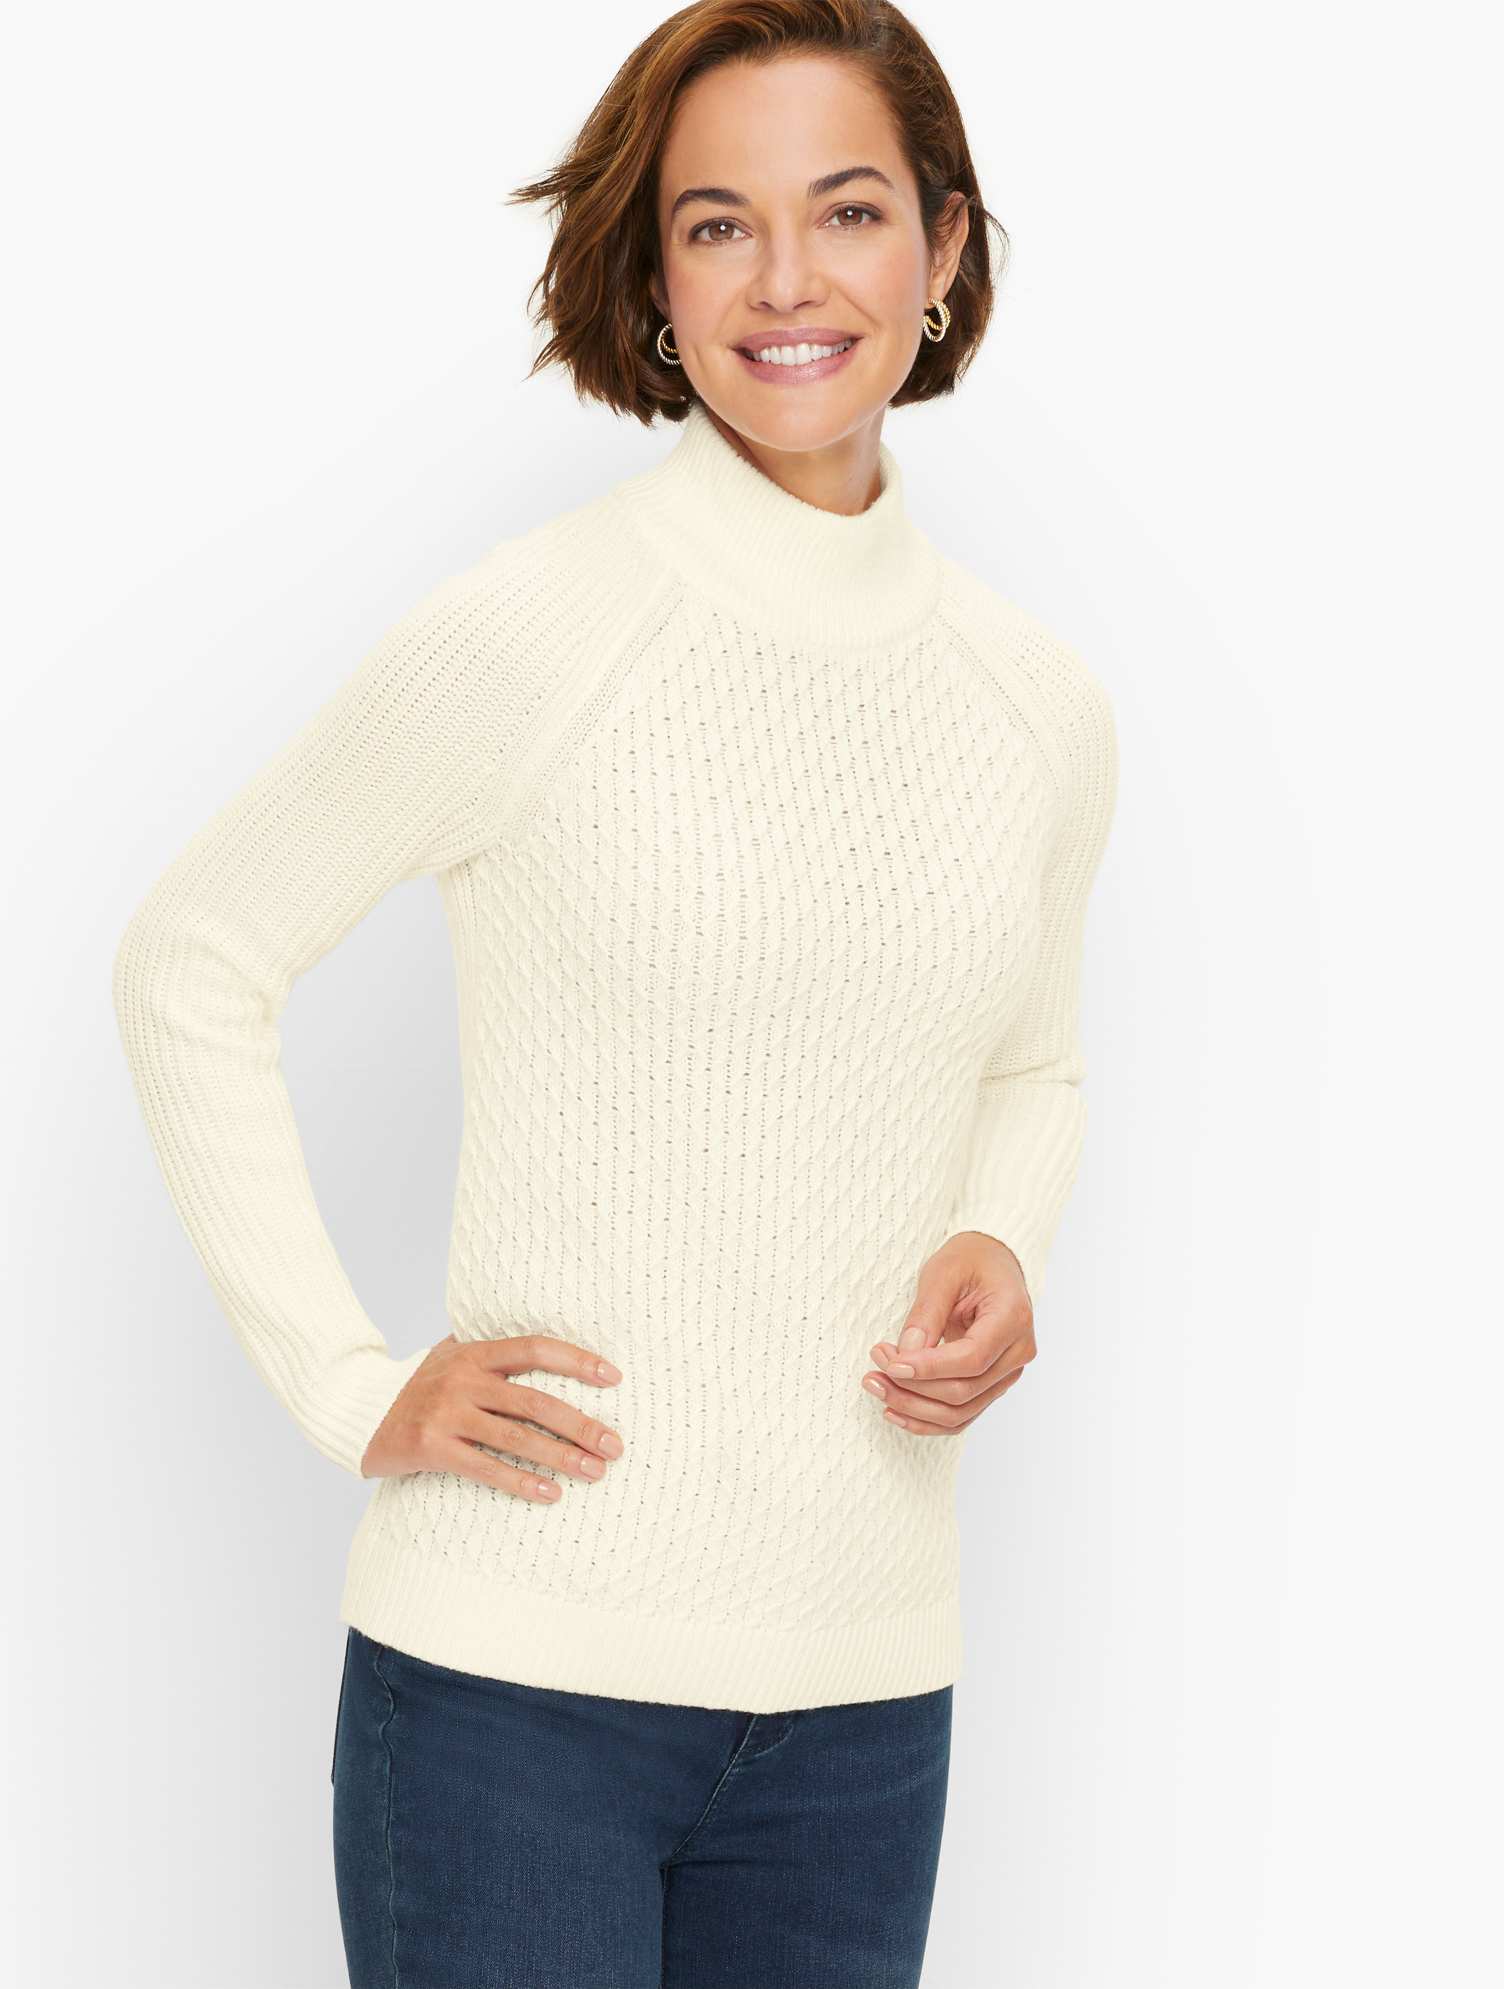 Talbots Textured Stitch Sweater - Ivory - 3x